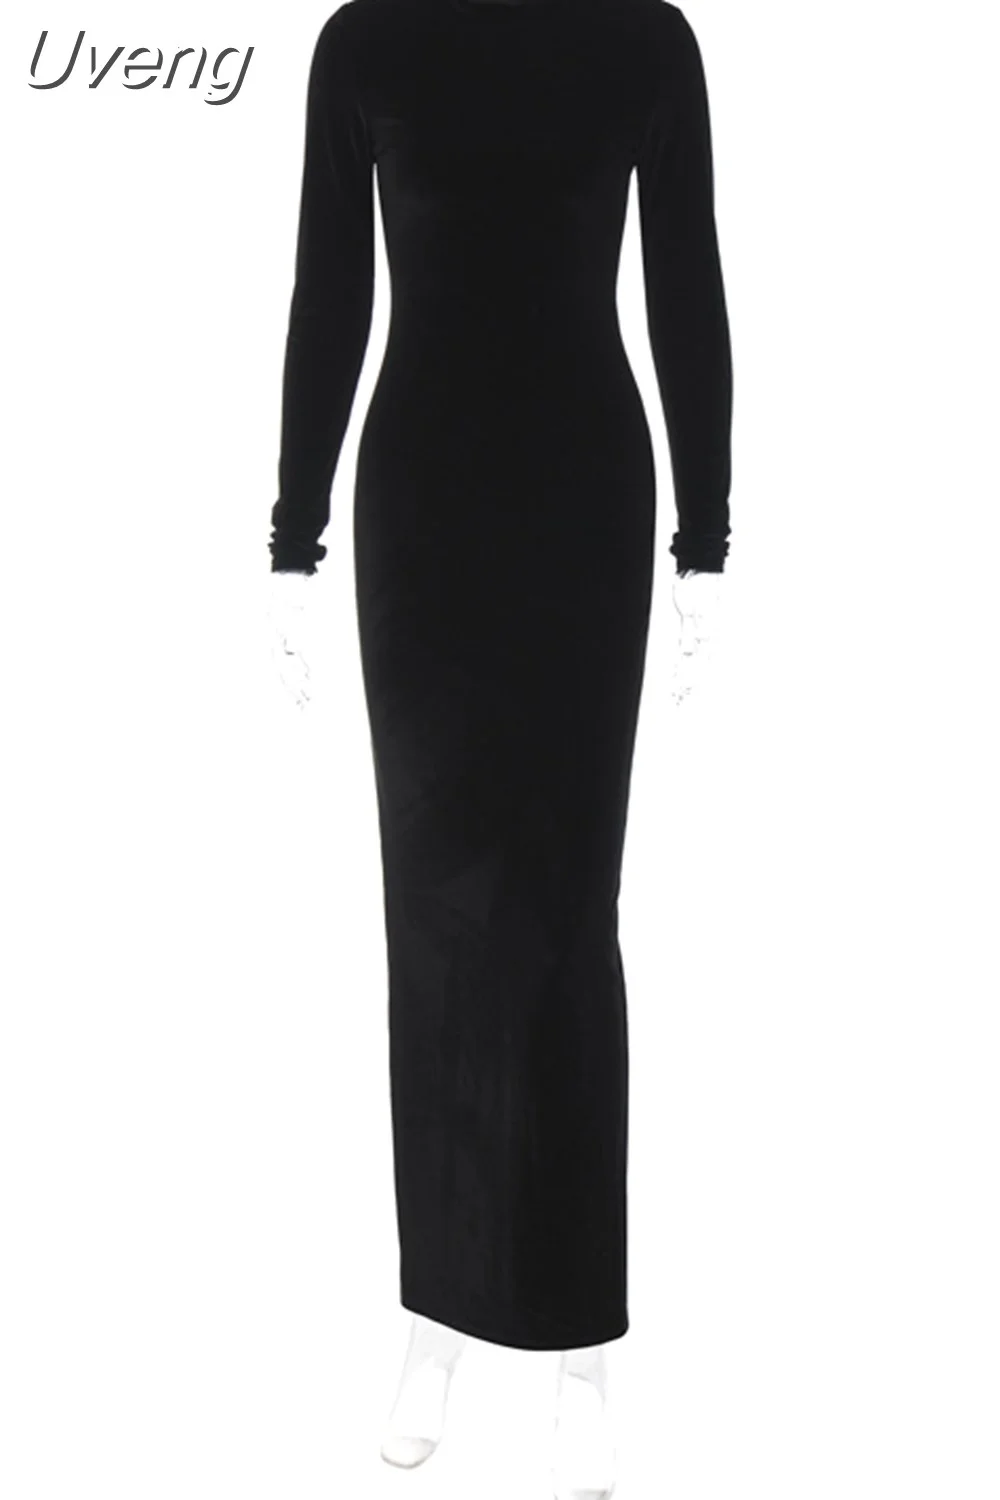 Uveng Sleeve Elegant Black Velvet Bodycon Maxi Dress Women Ruched Party Evening Long Dresses 2023 Autumn Winter Female Clothes